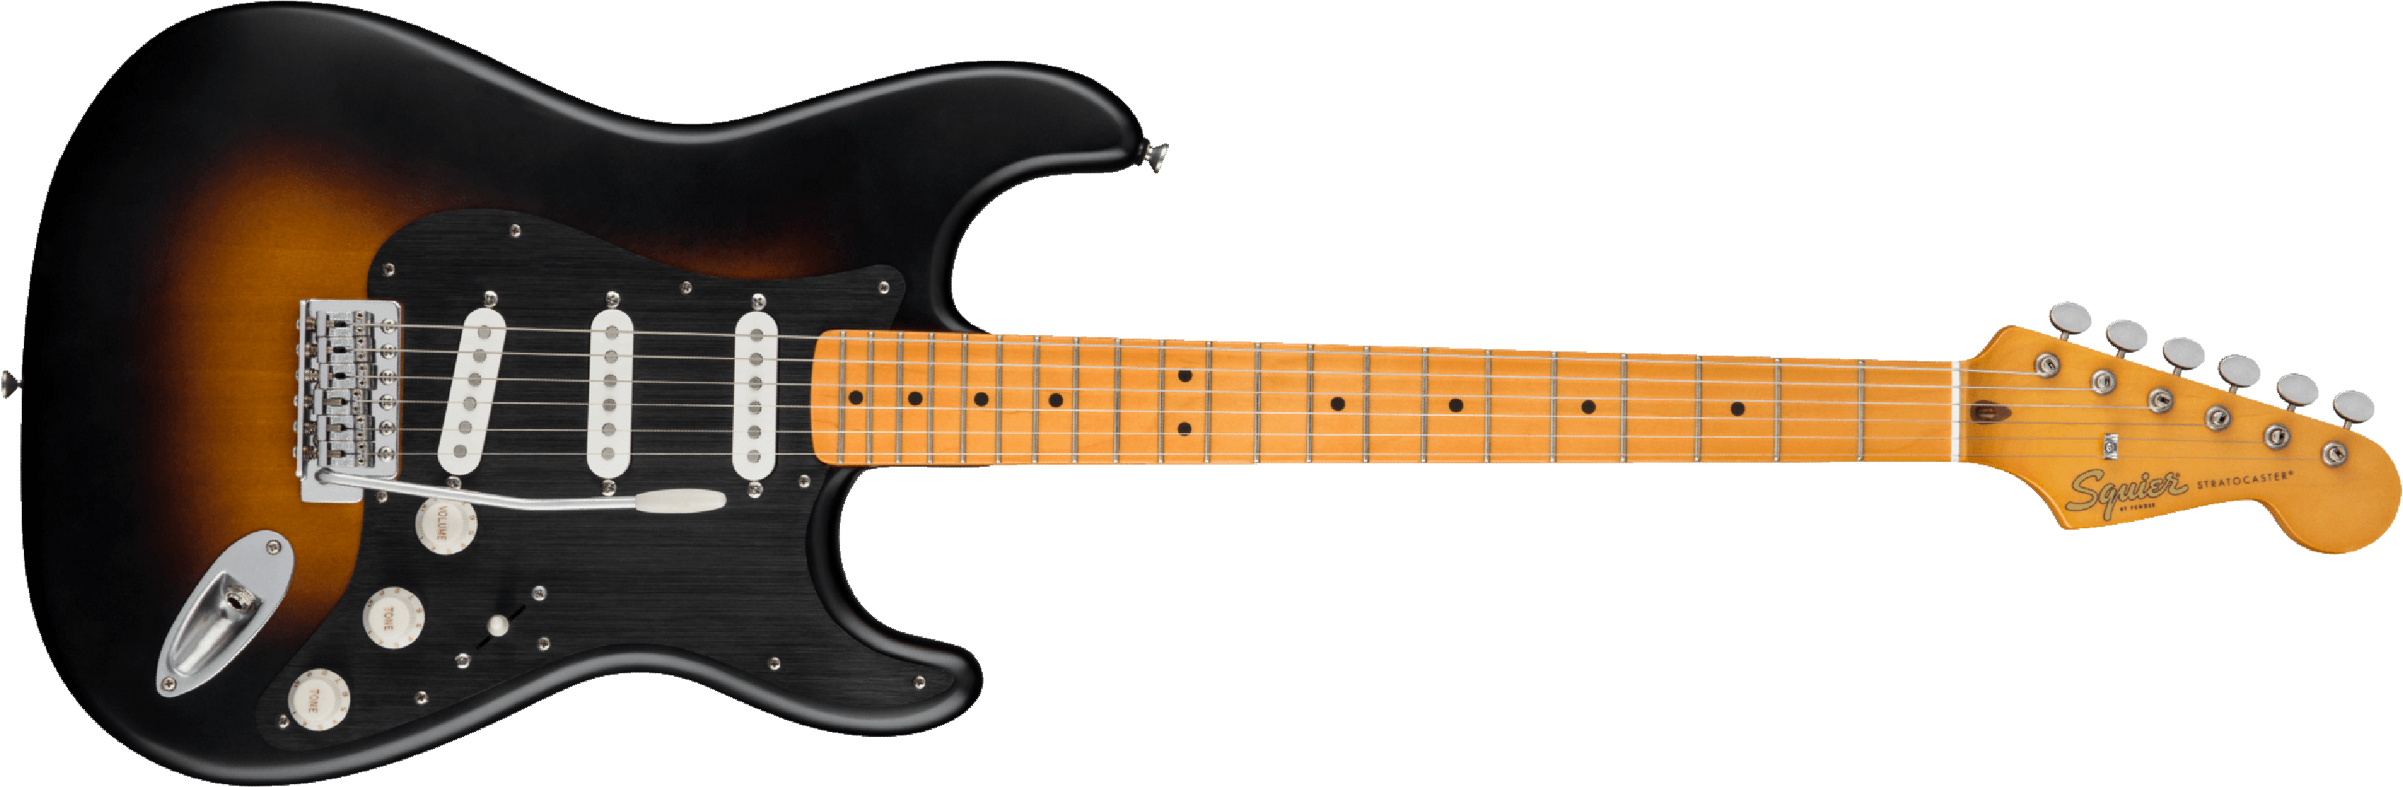 Squier Strat 40th Anniversary Vintage Edition Mn - Satin Wide 2-color Sunburst - Str shape electric guitar - Main picture